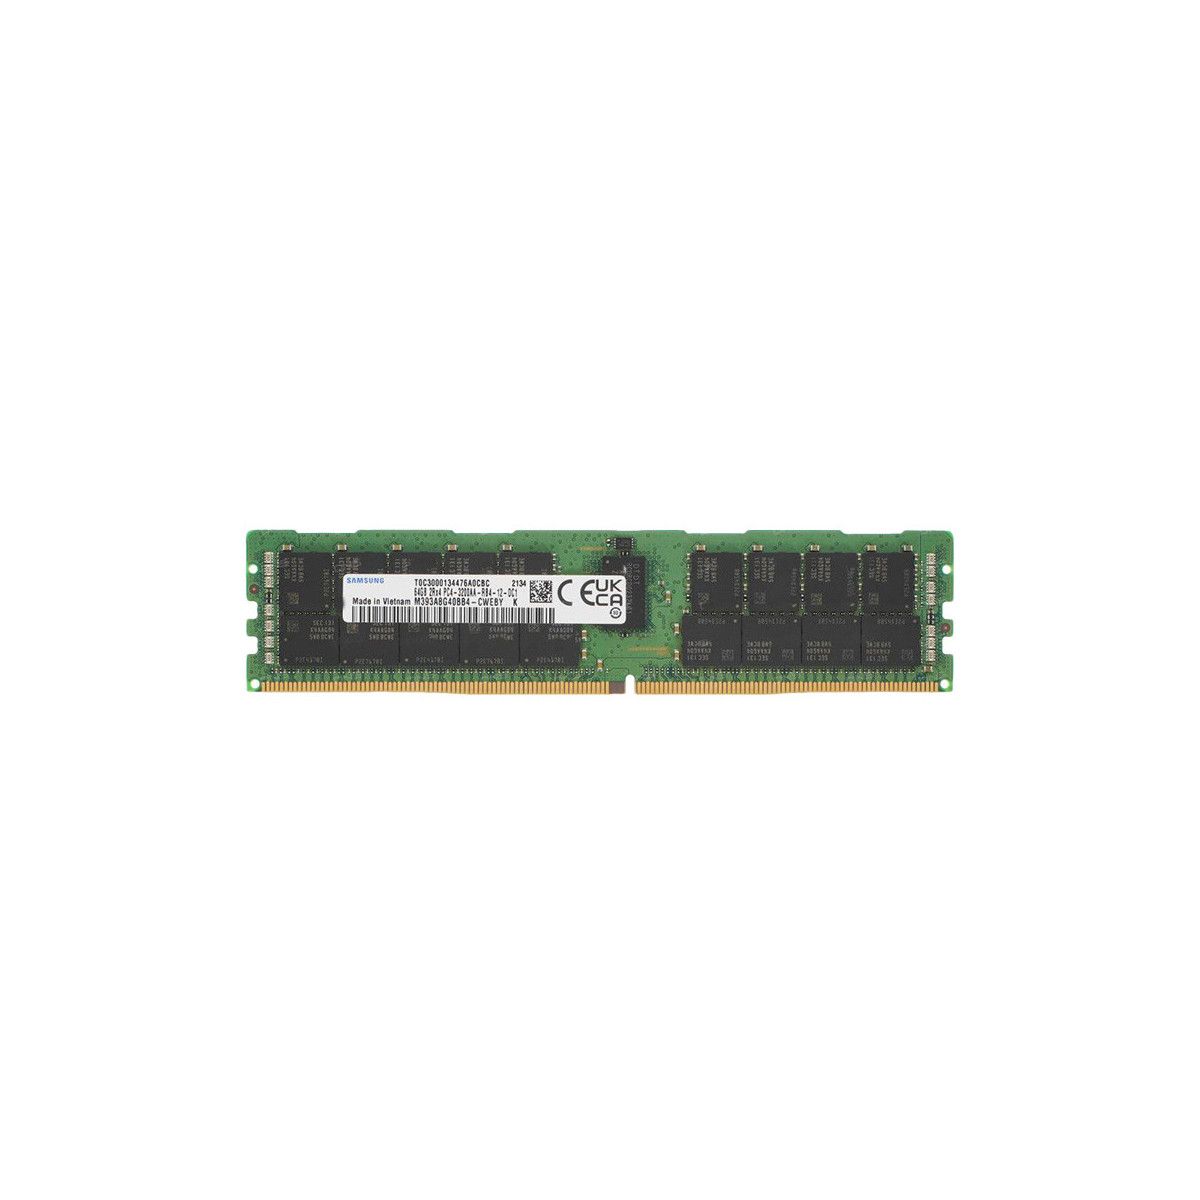 370-AEVP-MS - Memstar 1x 64GB DDR4-3200 RDIMM PC4-25600R - Mem-Star Kompatibel OEM Speichermedien 1 - Memstar 